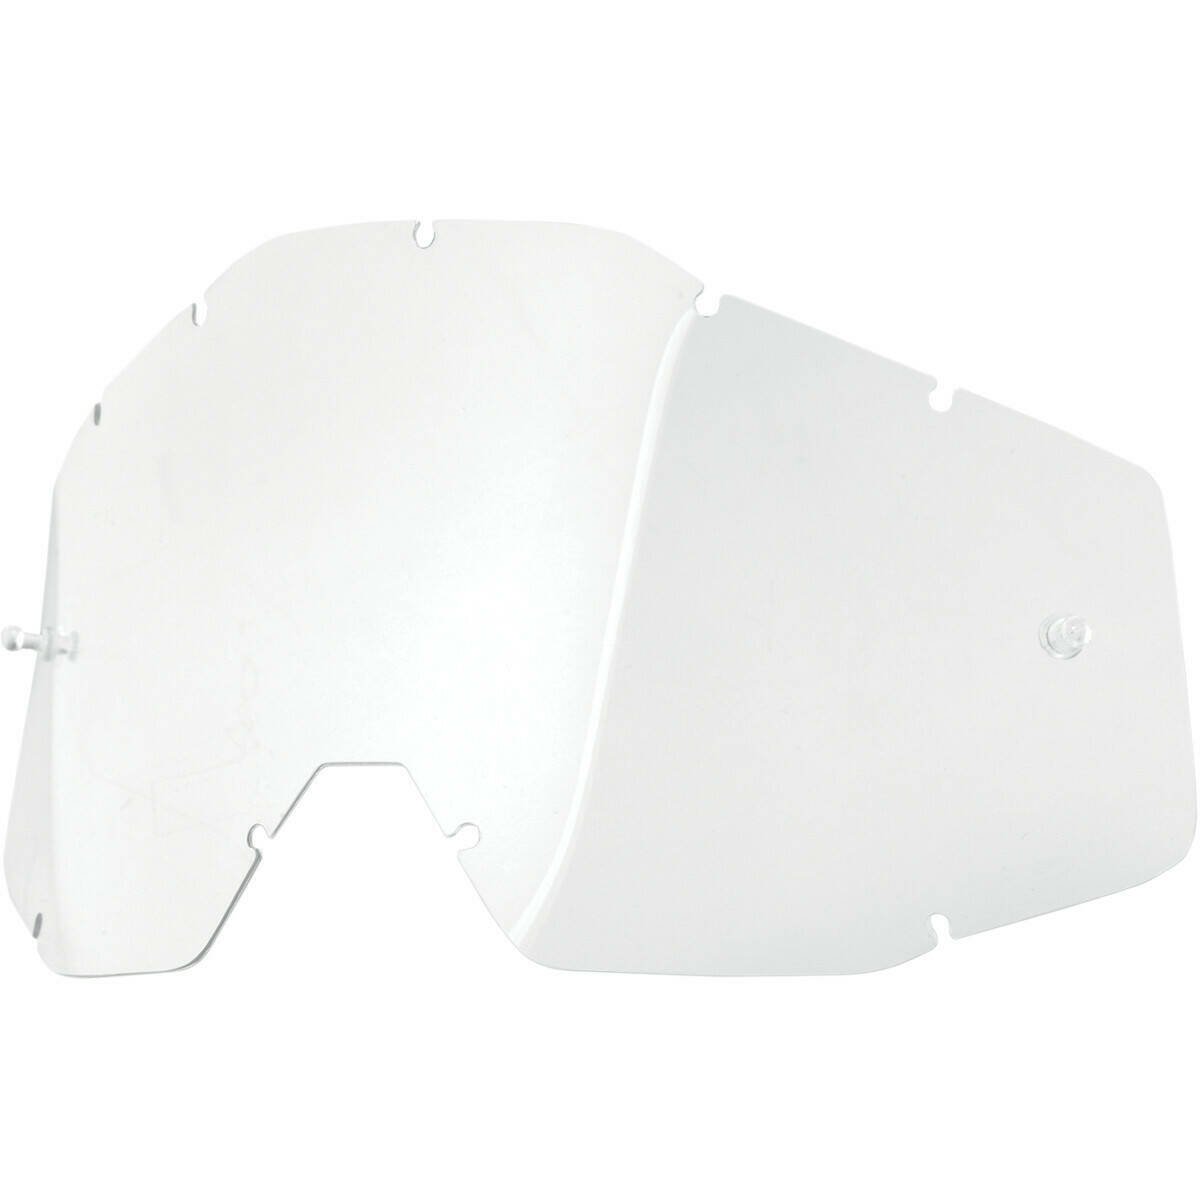 51002-005-02 RACECRAFT/ACCURI/STRATA Replacement Lens Green Mirror Anti-Fog, Free Size 100% Speedlab 